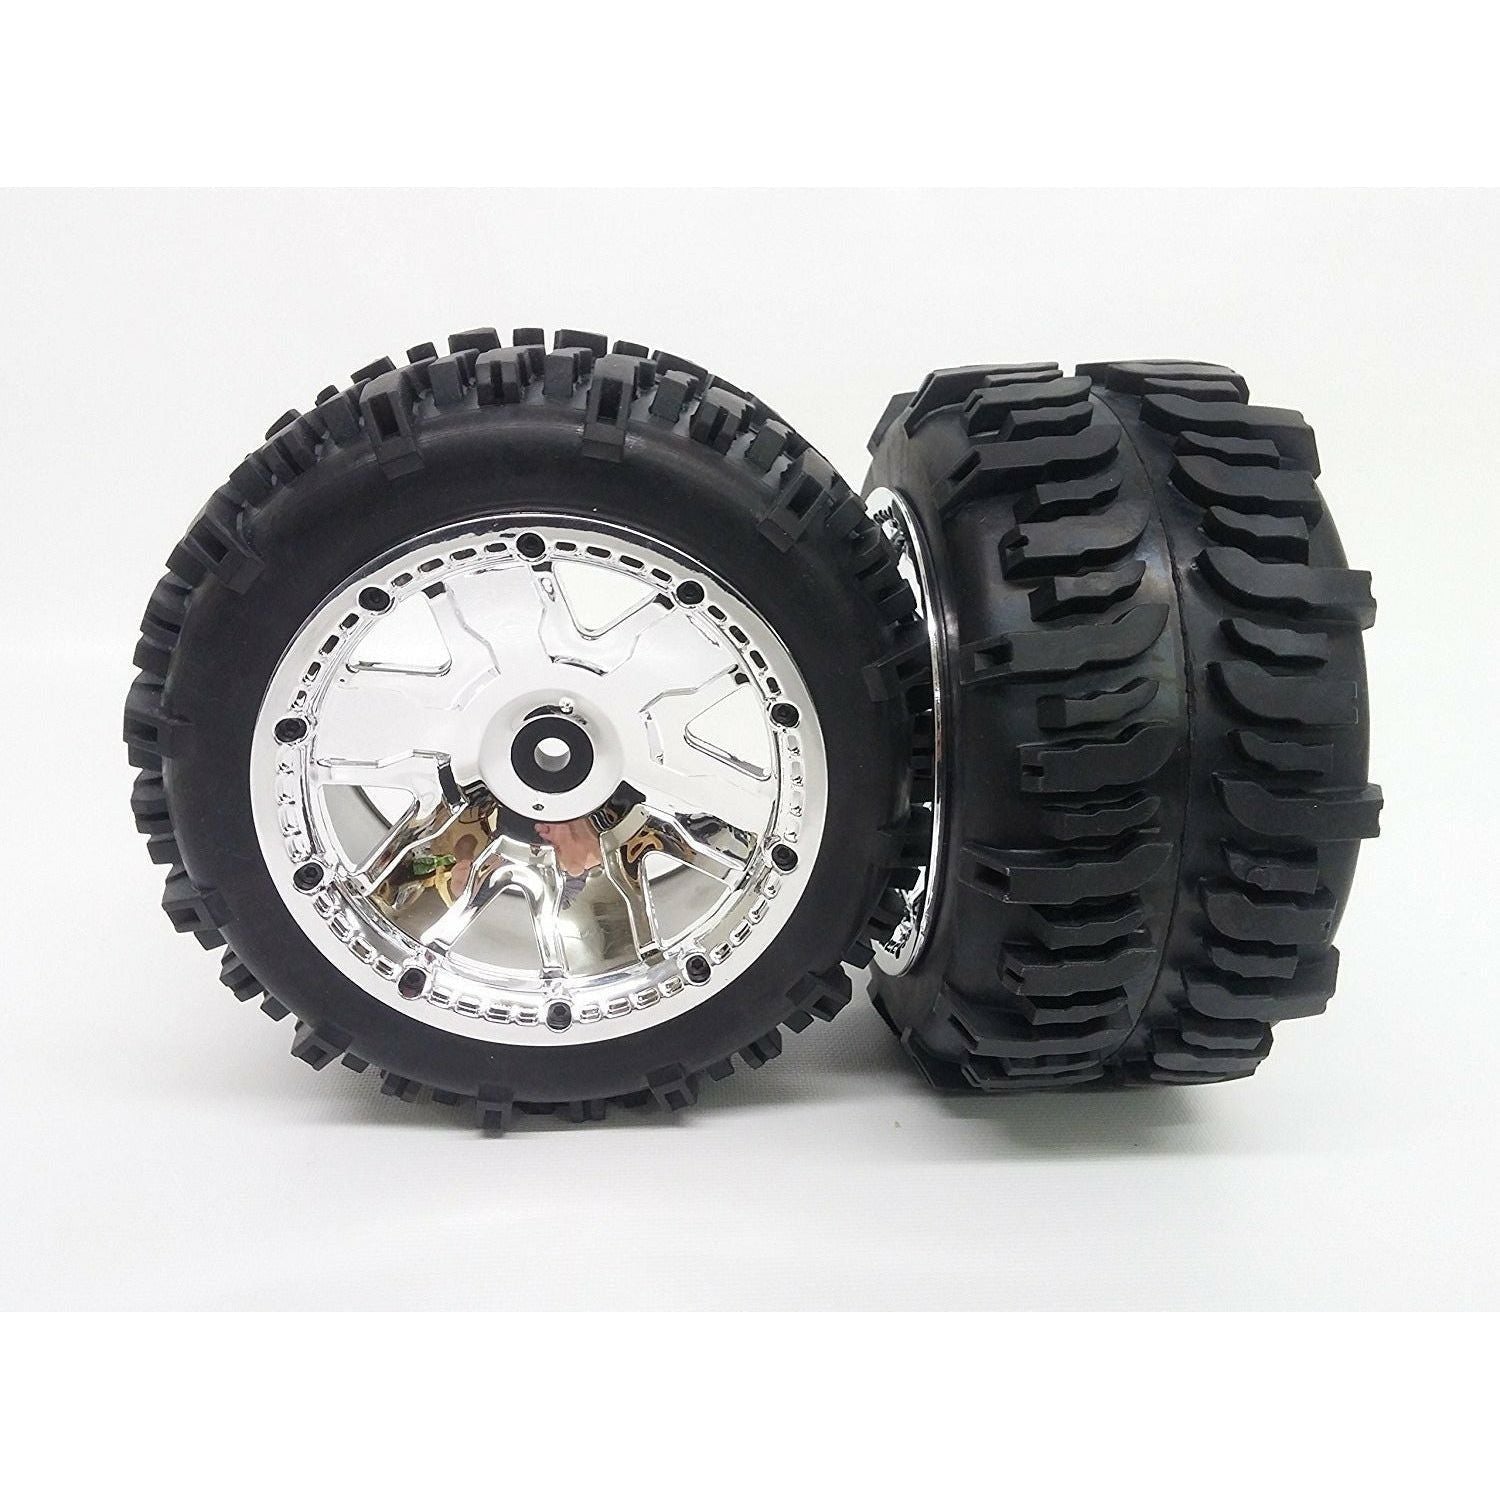 Swamp Dawg Tires & Yuma Rims with Beadlocks - Rear (1 Pair) (Choose Color)